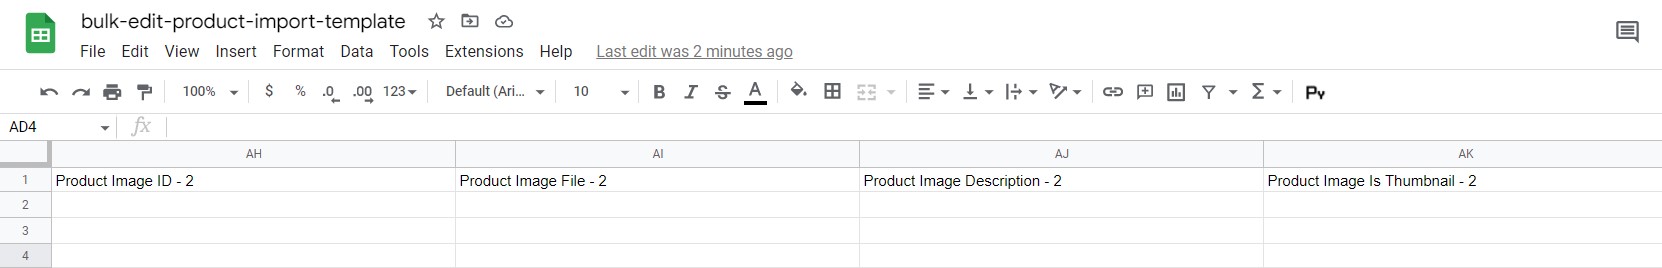 BigCommerce product import: add product image file 2